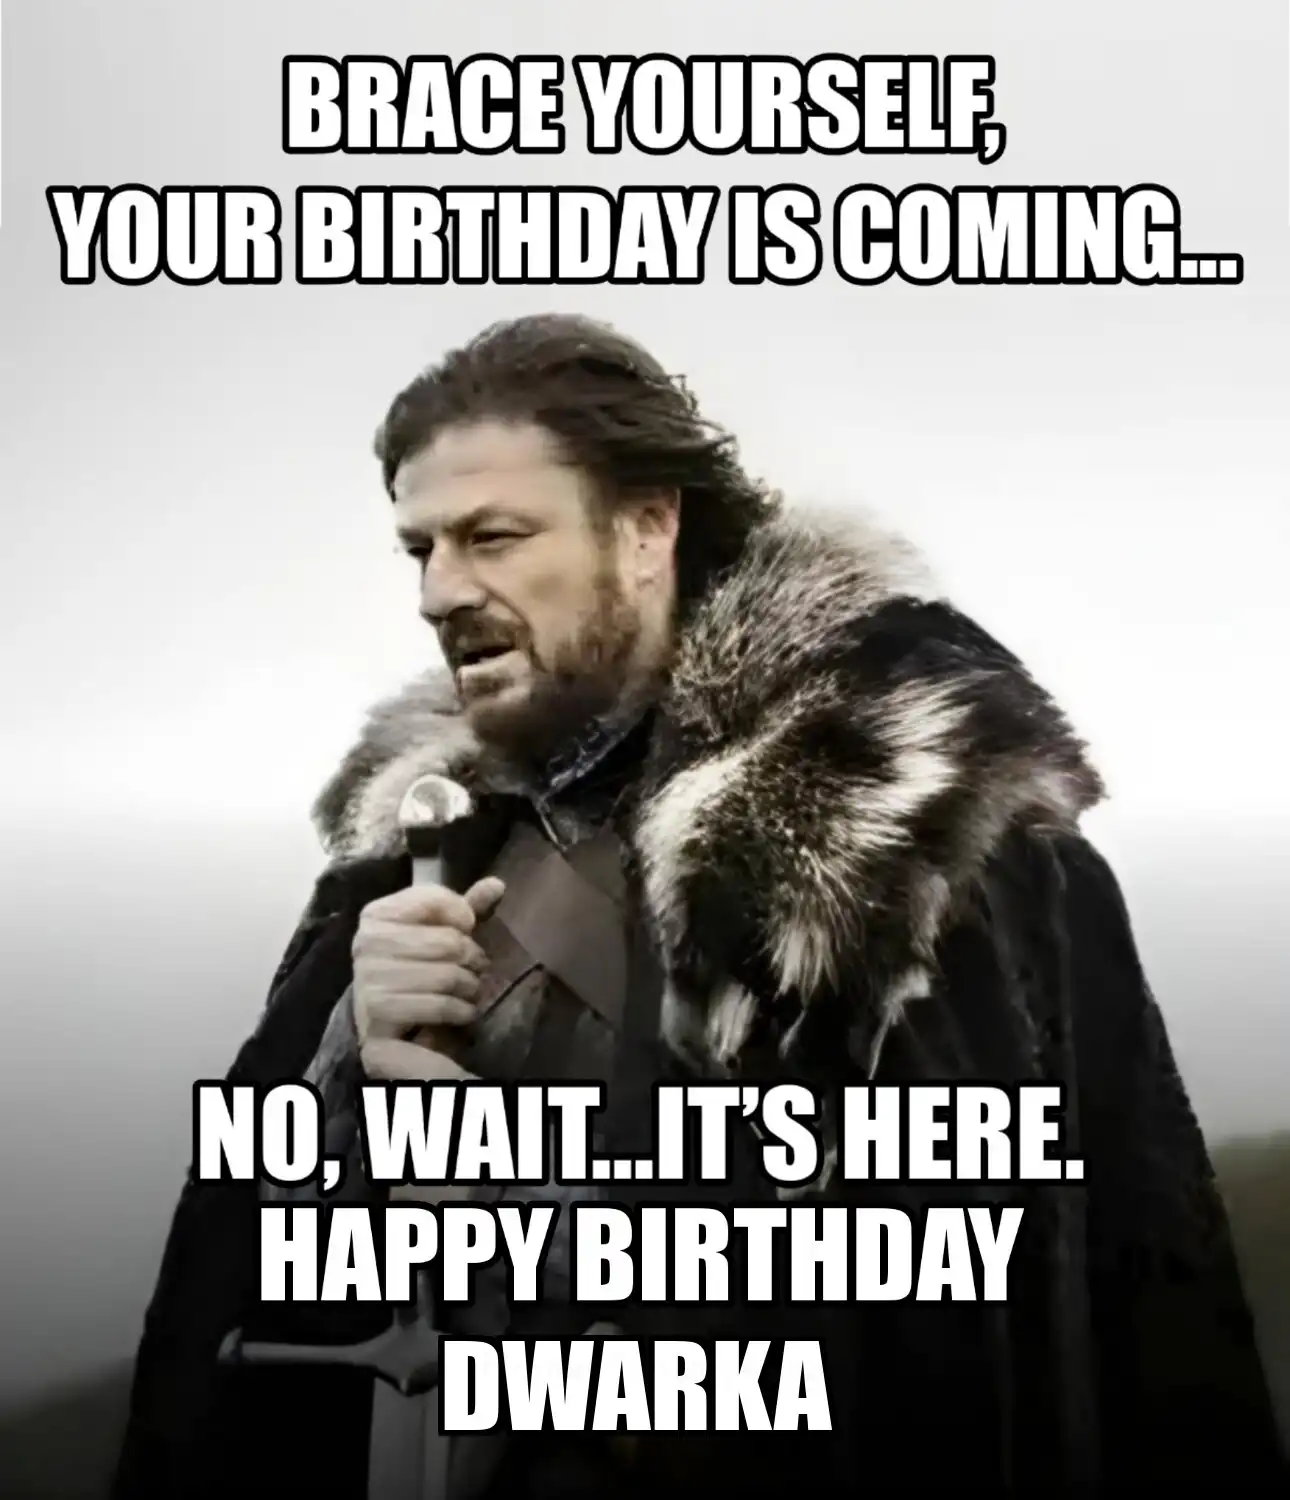 Happy Birthday Dwarka Brace Yourself Your Birthday Is Coming Meme